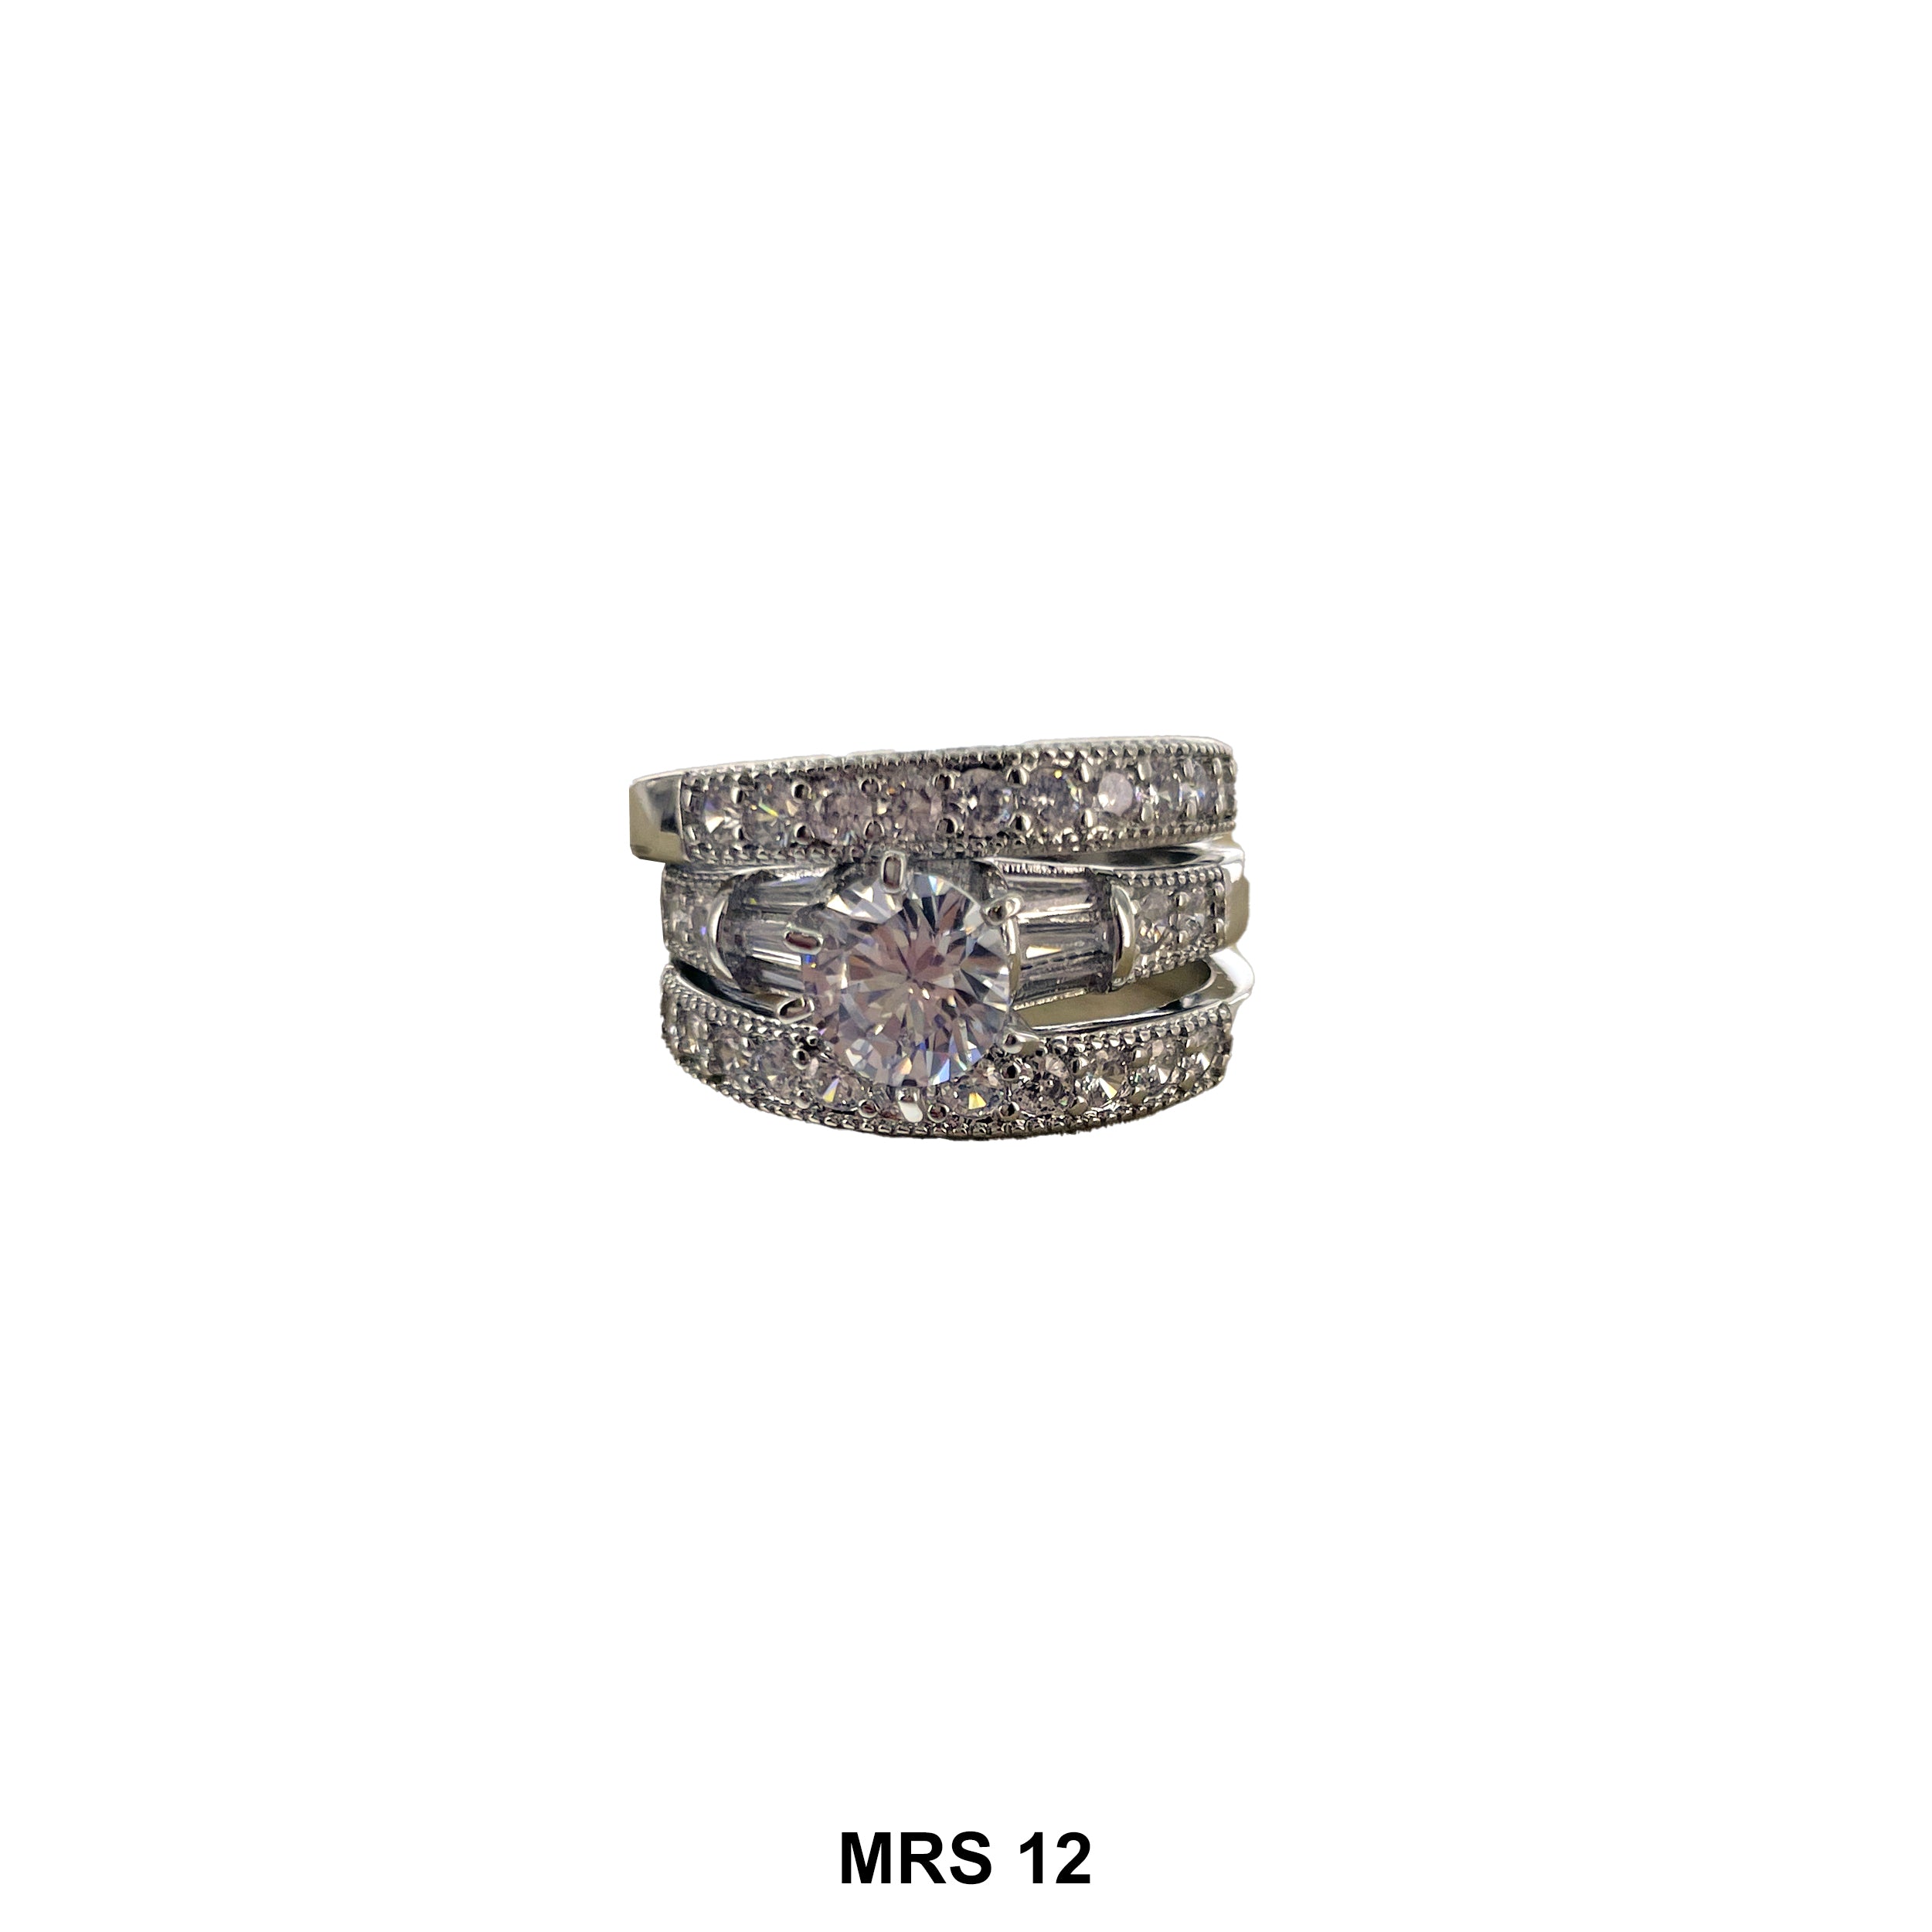 Triple Matrimonial Stones Ring MRS 12